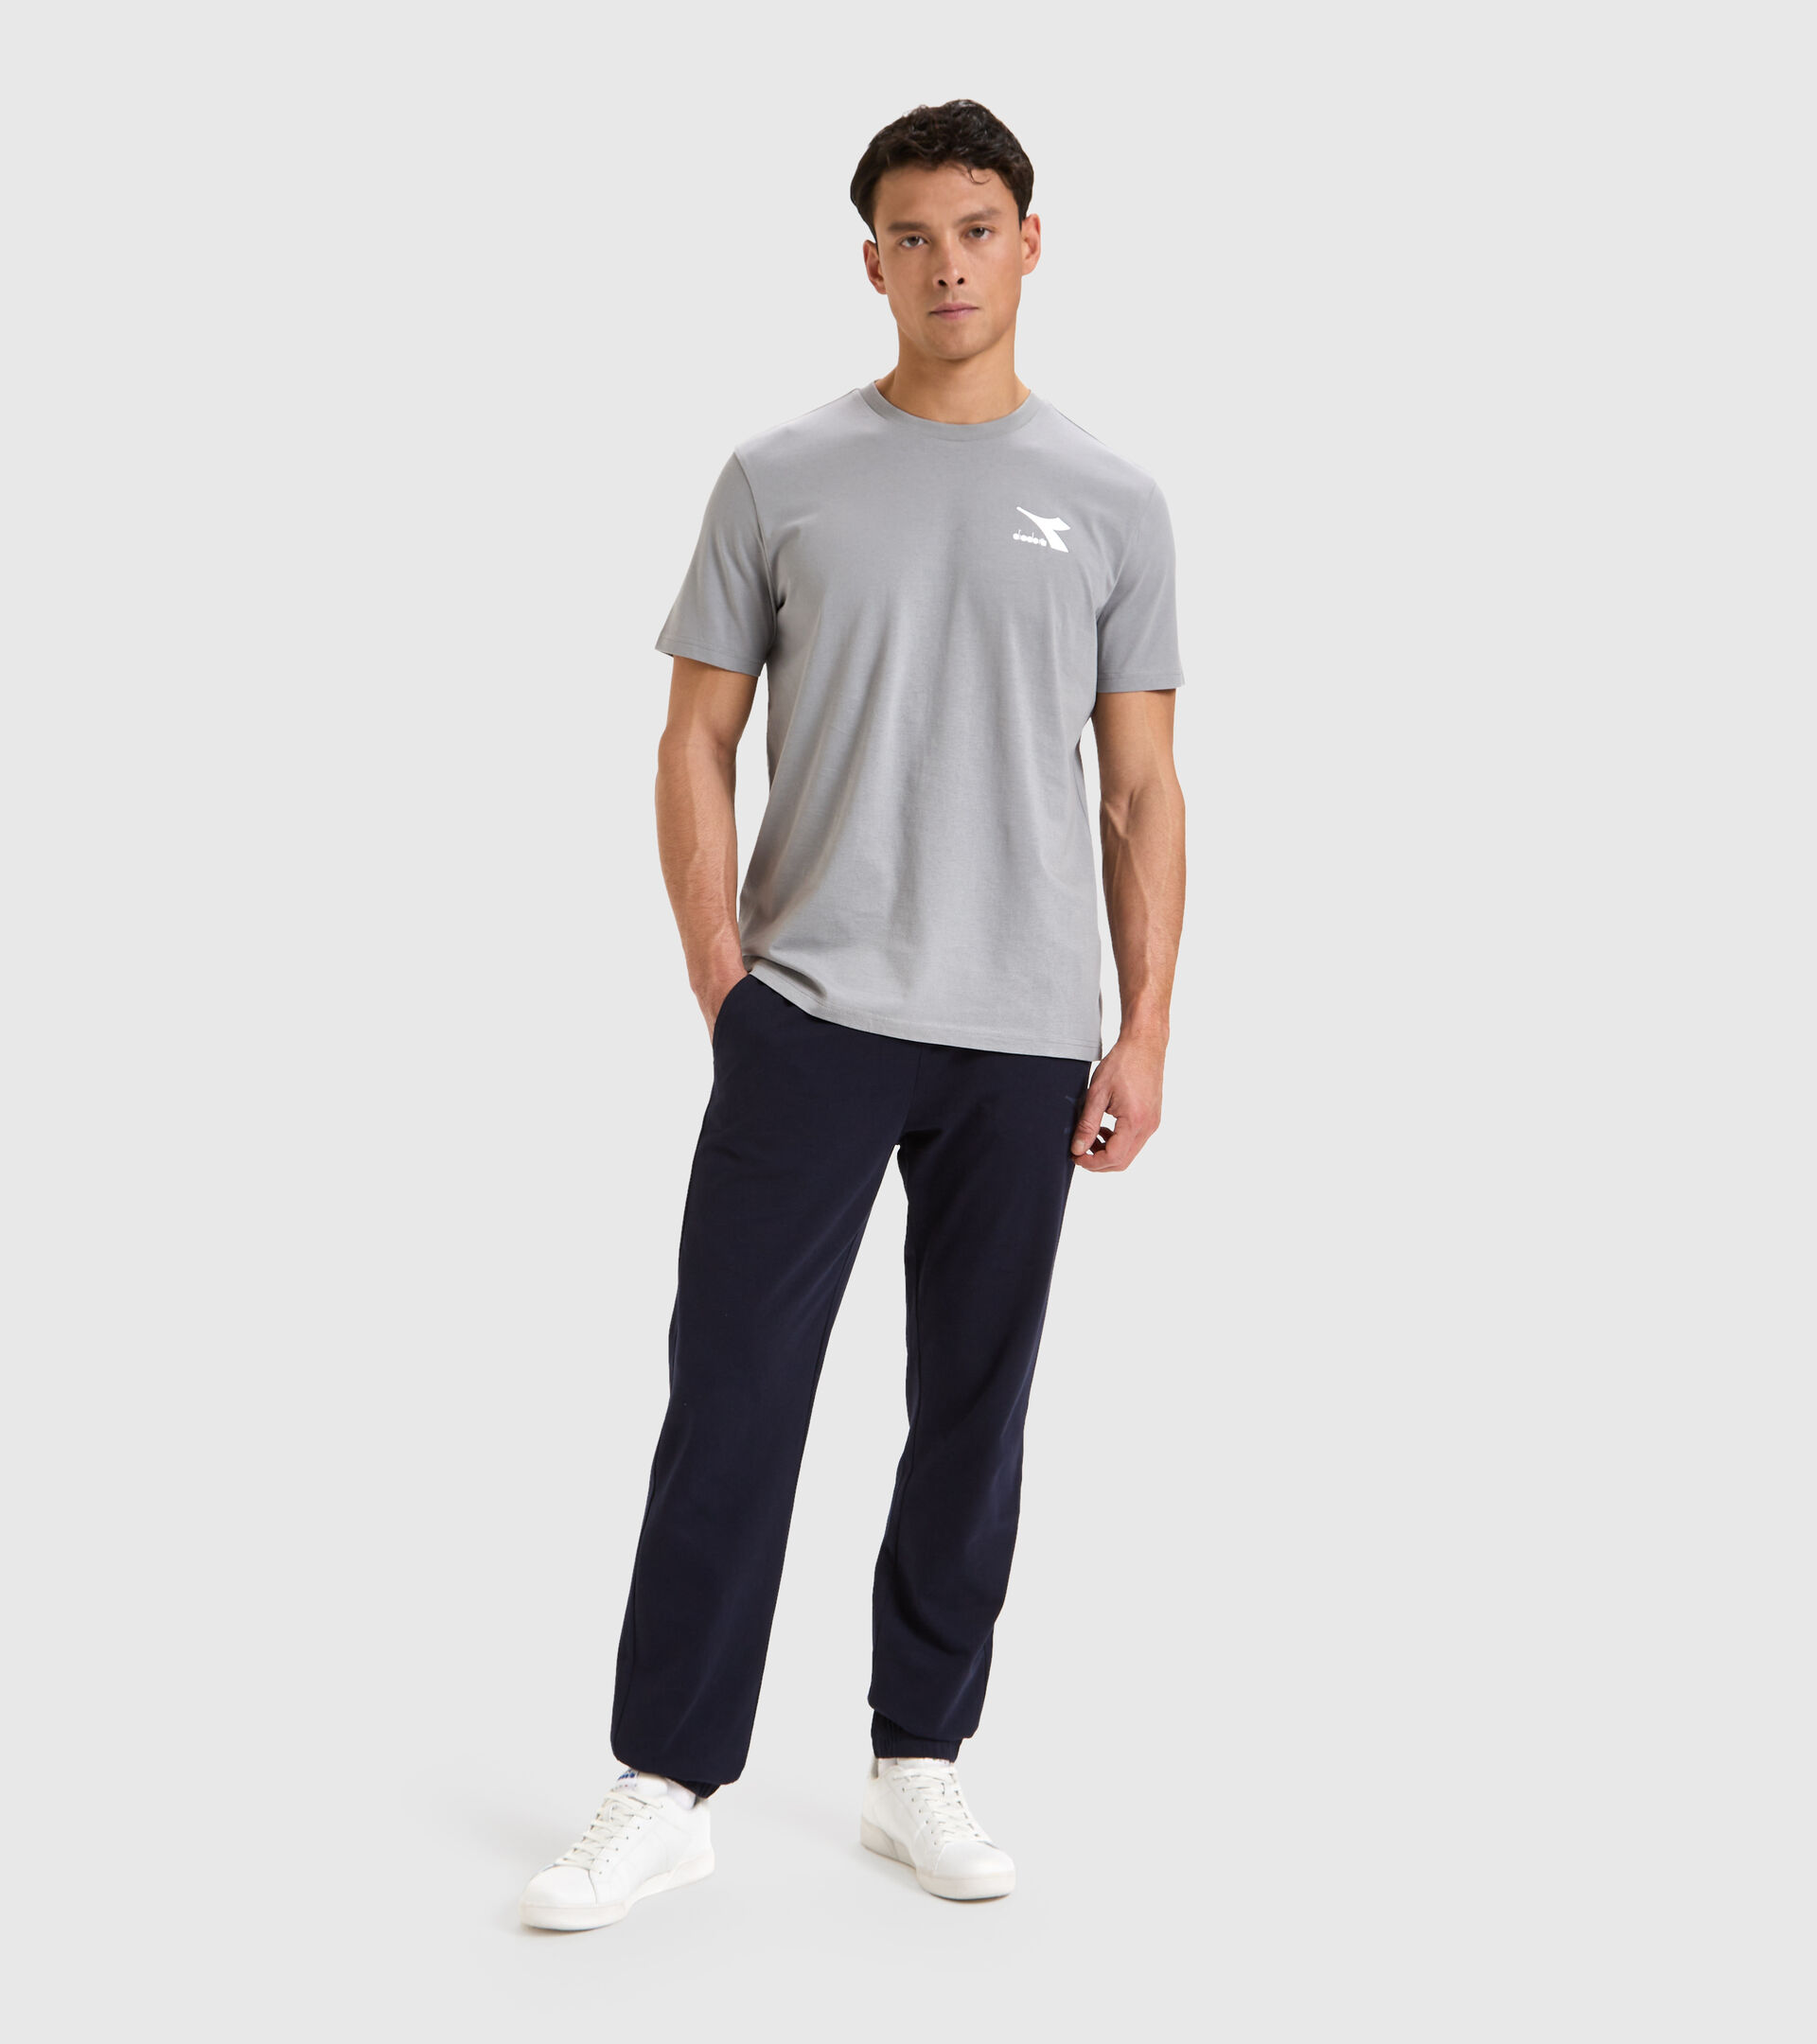 Cotton T-shirt - Men T-SHIRT SS CORE GRAY MOUSE - Diadora